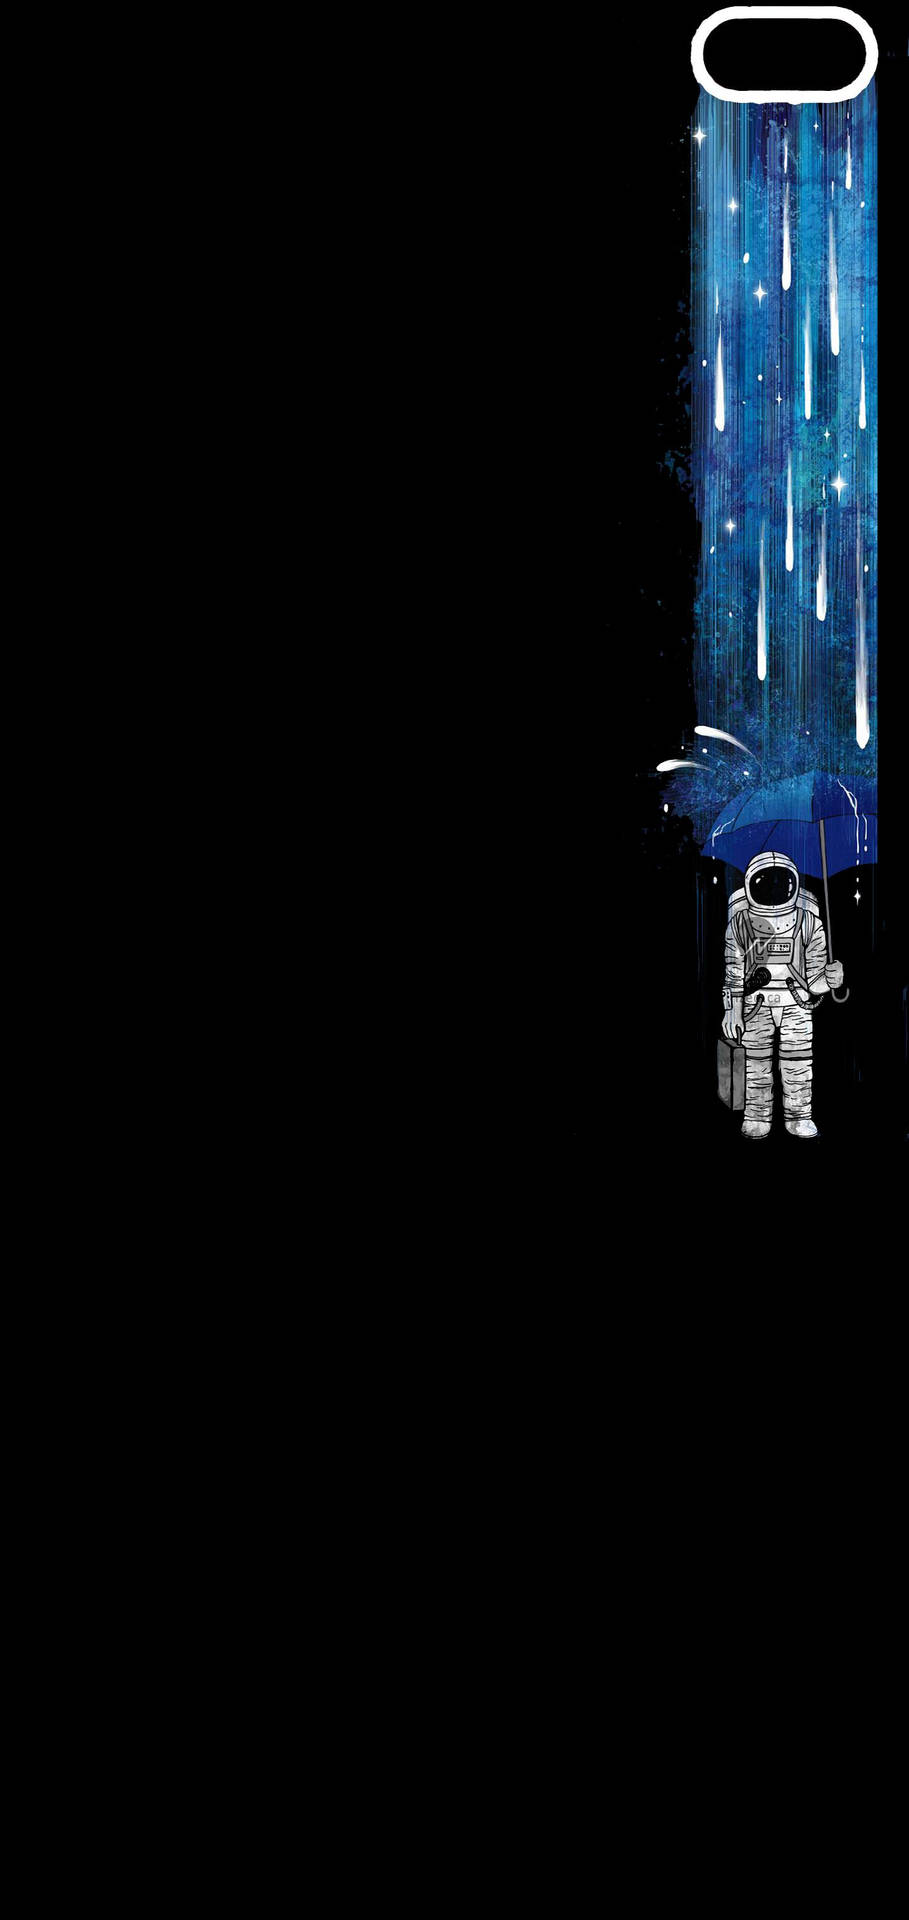 Astronaut And Umbrella Galaxy S10 Background